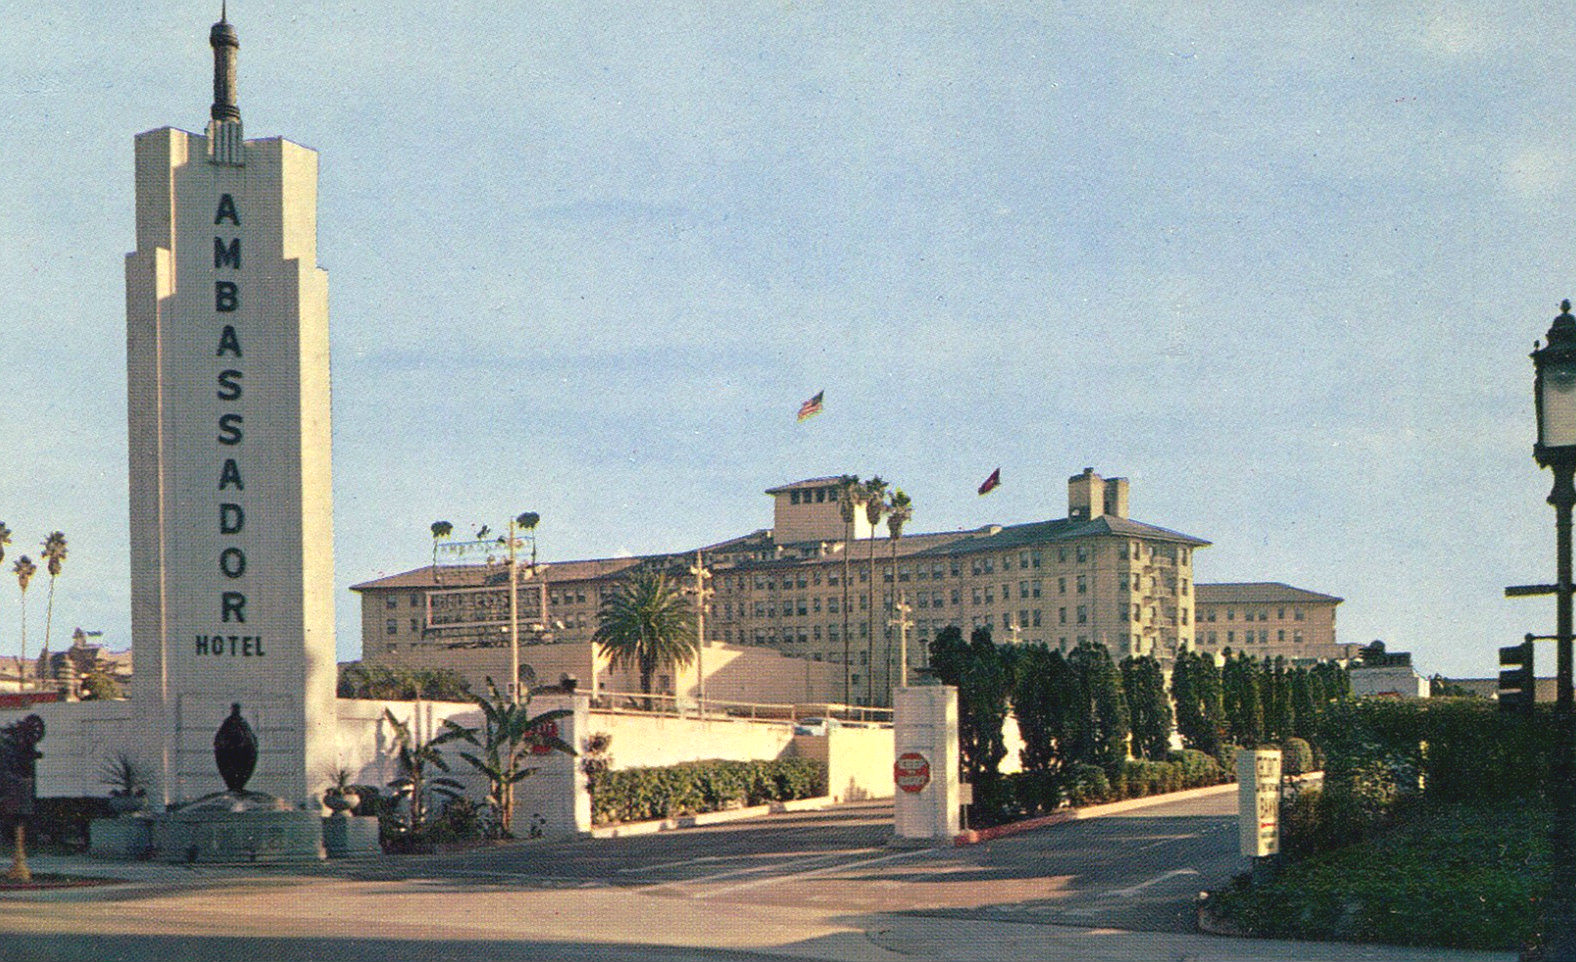 Entrance gate of the Ambassador Hotel in 1959